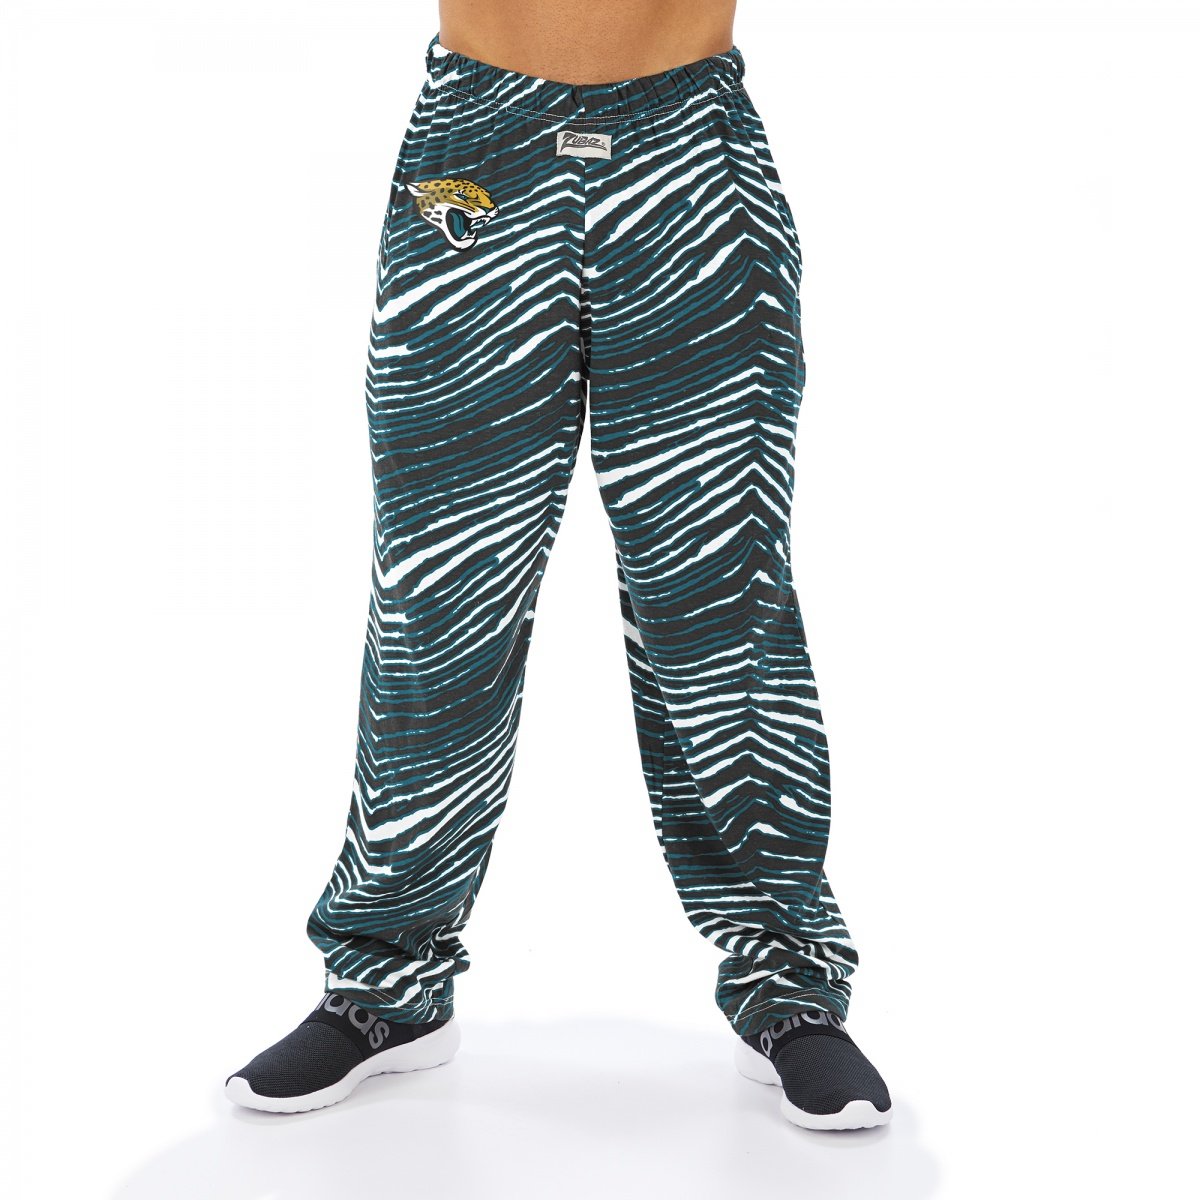 KS-QON BENG Jaguar Leopard with Black Spots Bell Bottom Leggings Pants for  Women Elastic High Waisted Flare Pants at Amazon Women's Clothing store